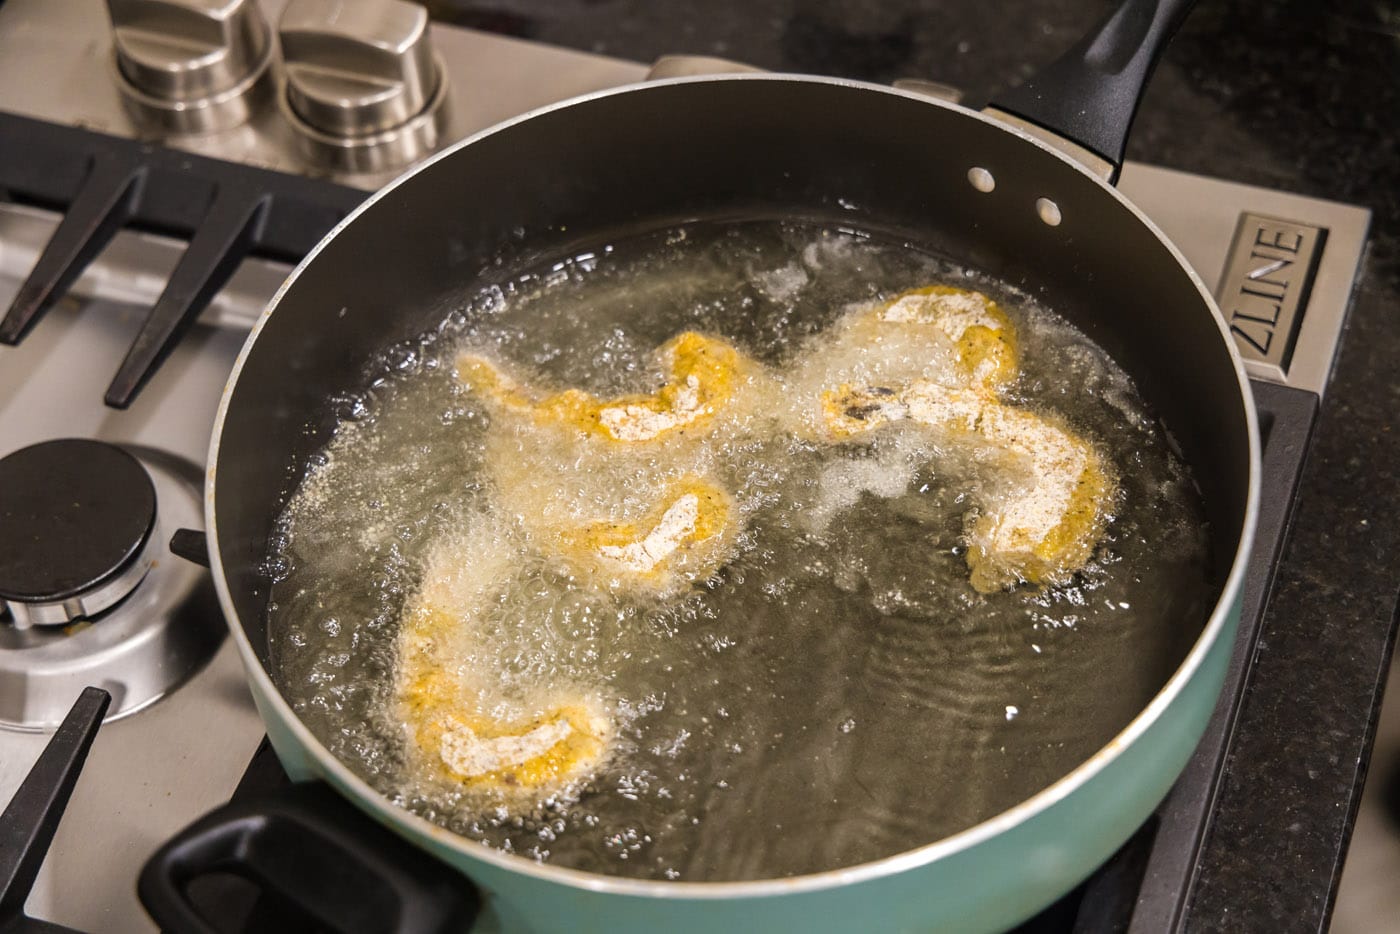 frying breaded shrimp in a skillet of oil